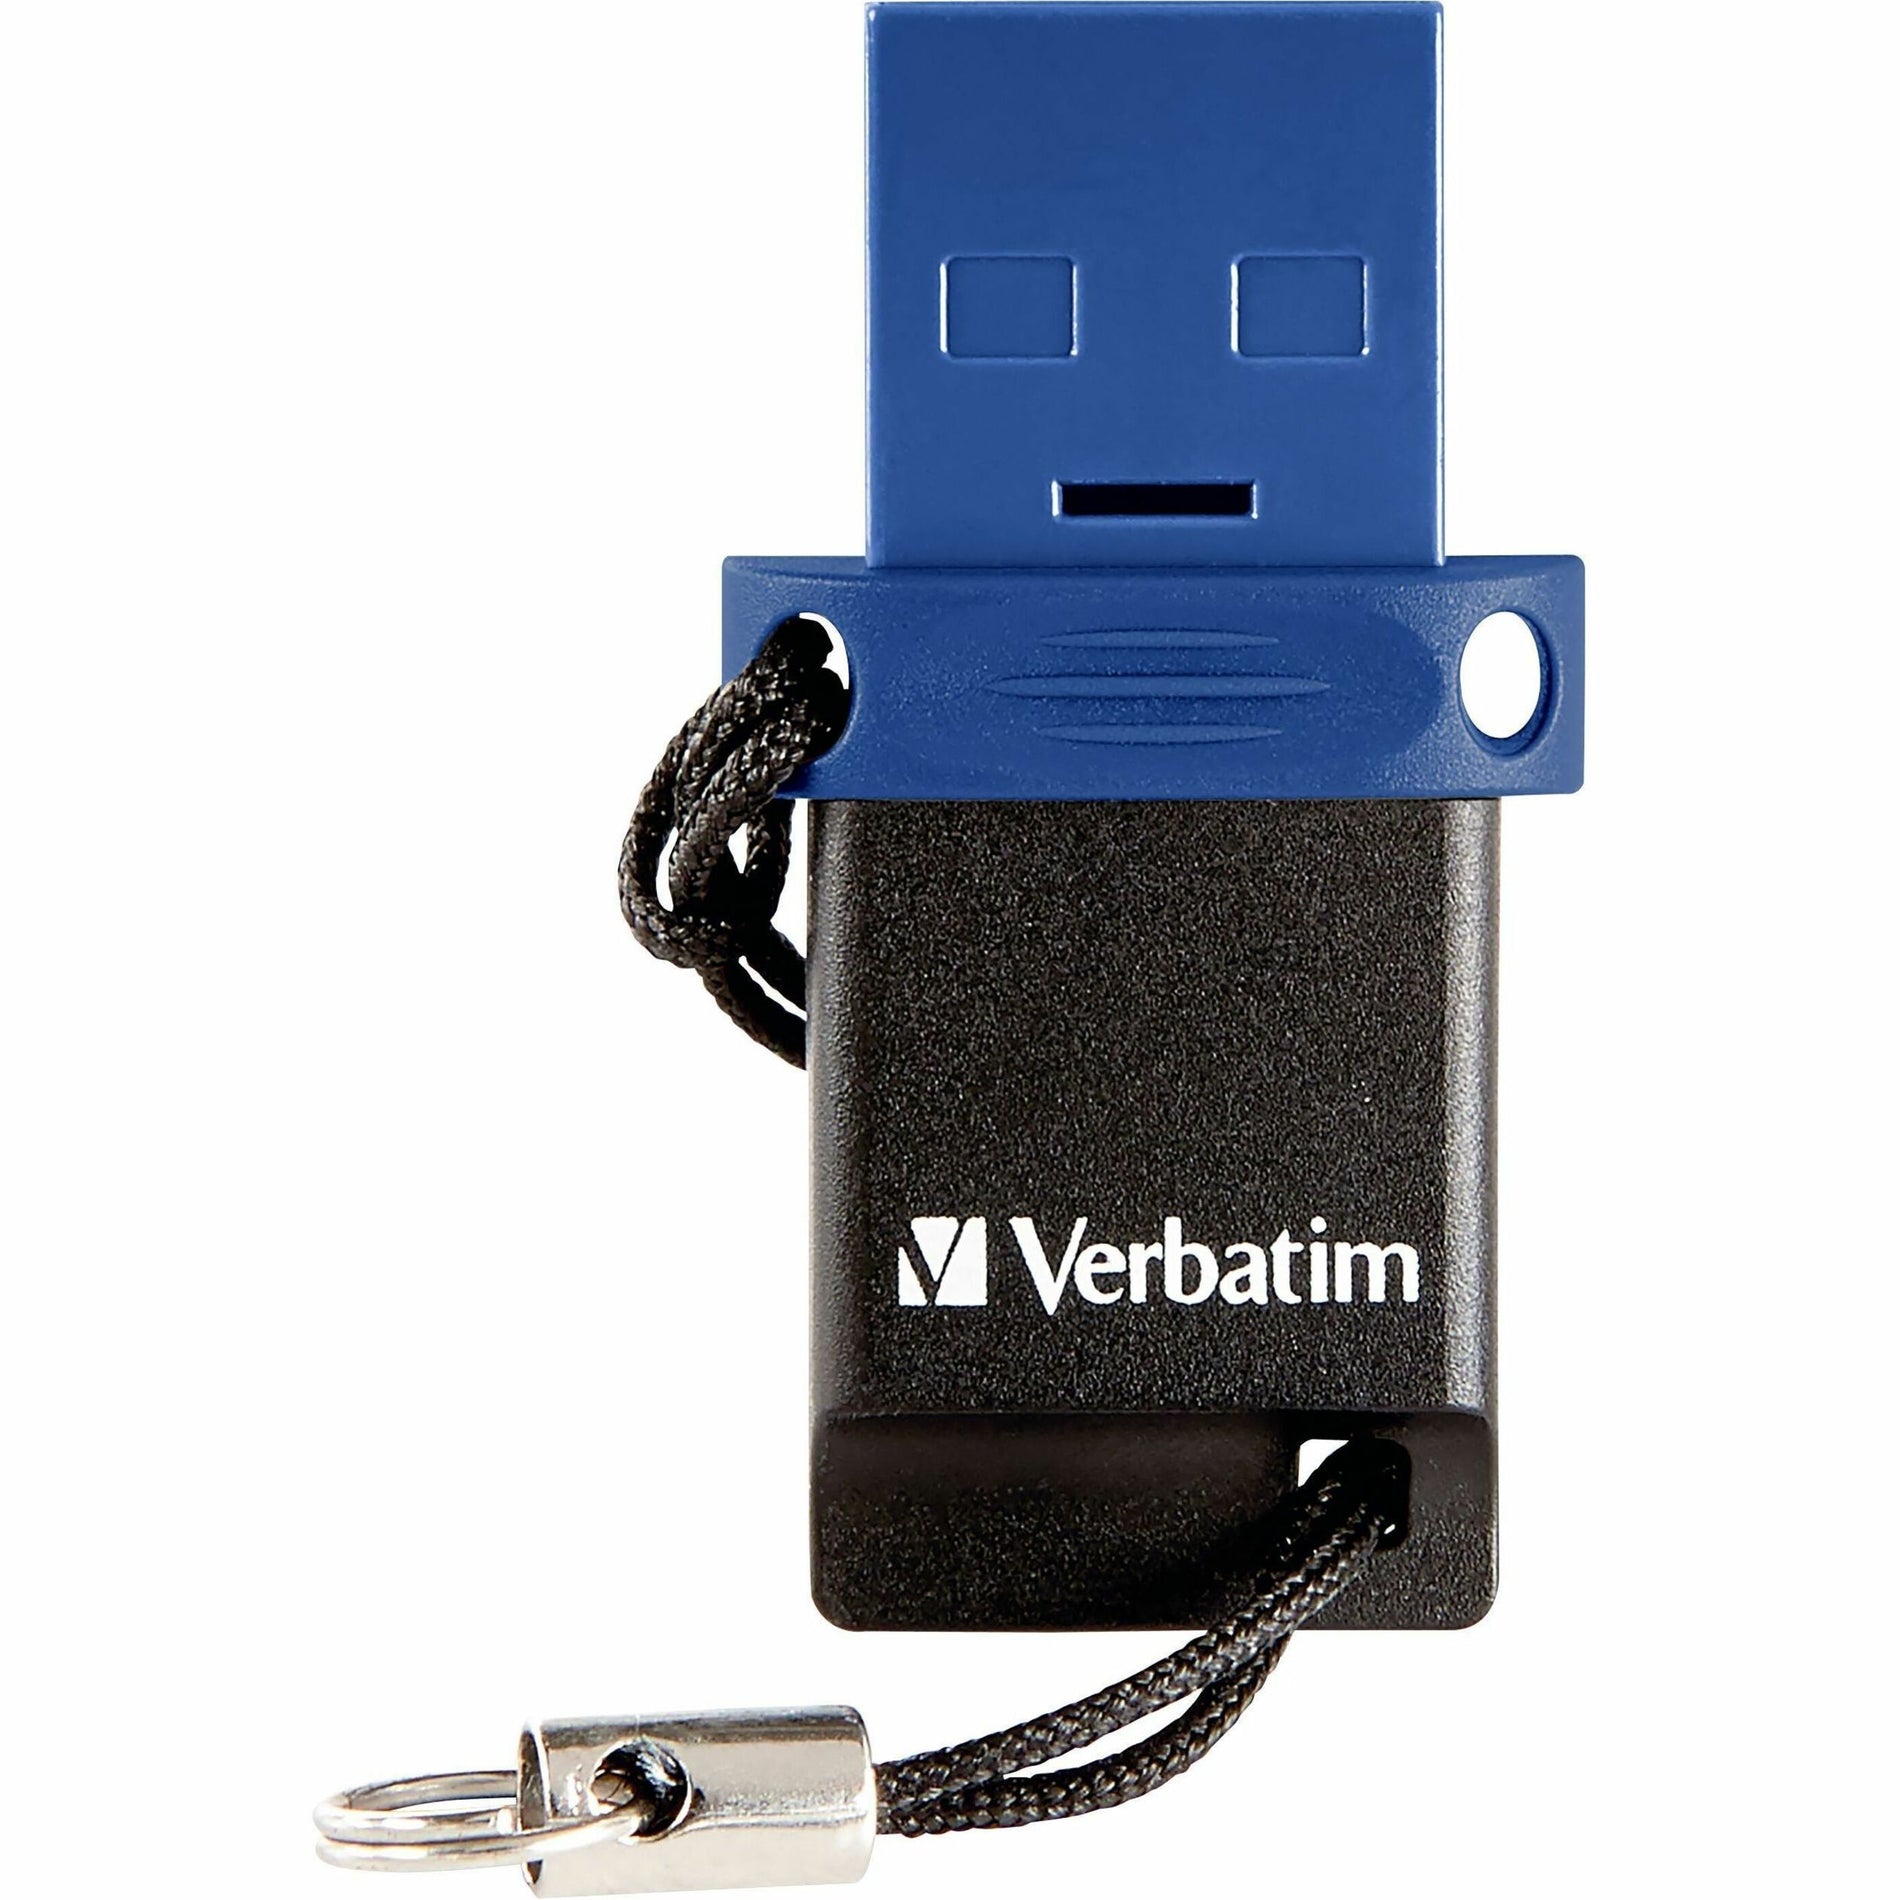 Verbatim 71275 Store 'n' Go Dual 128GB USB Flash Drive, Blue